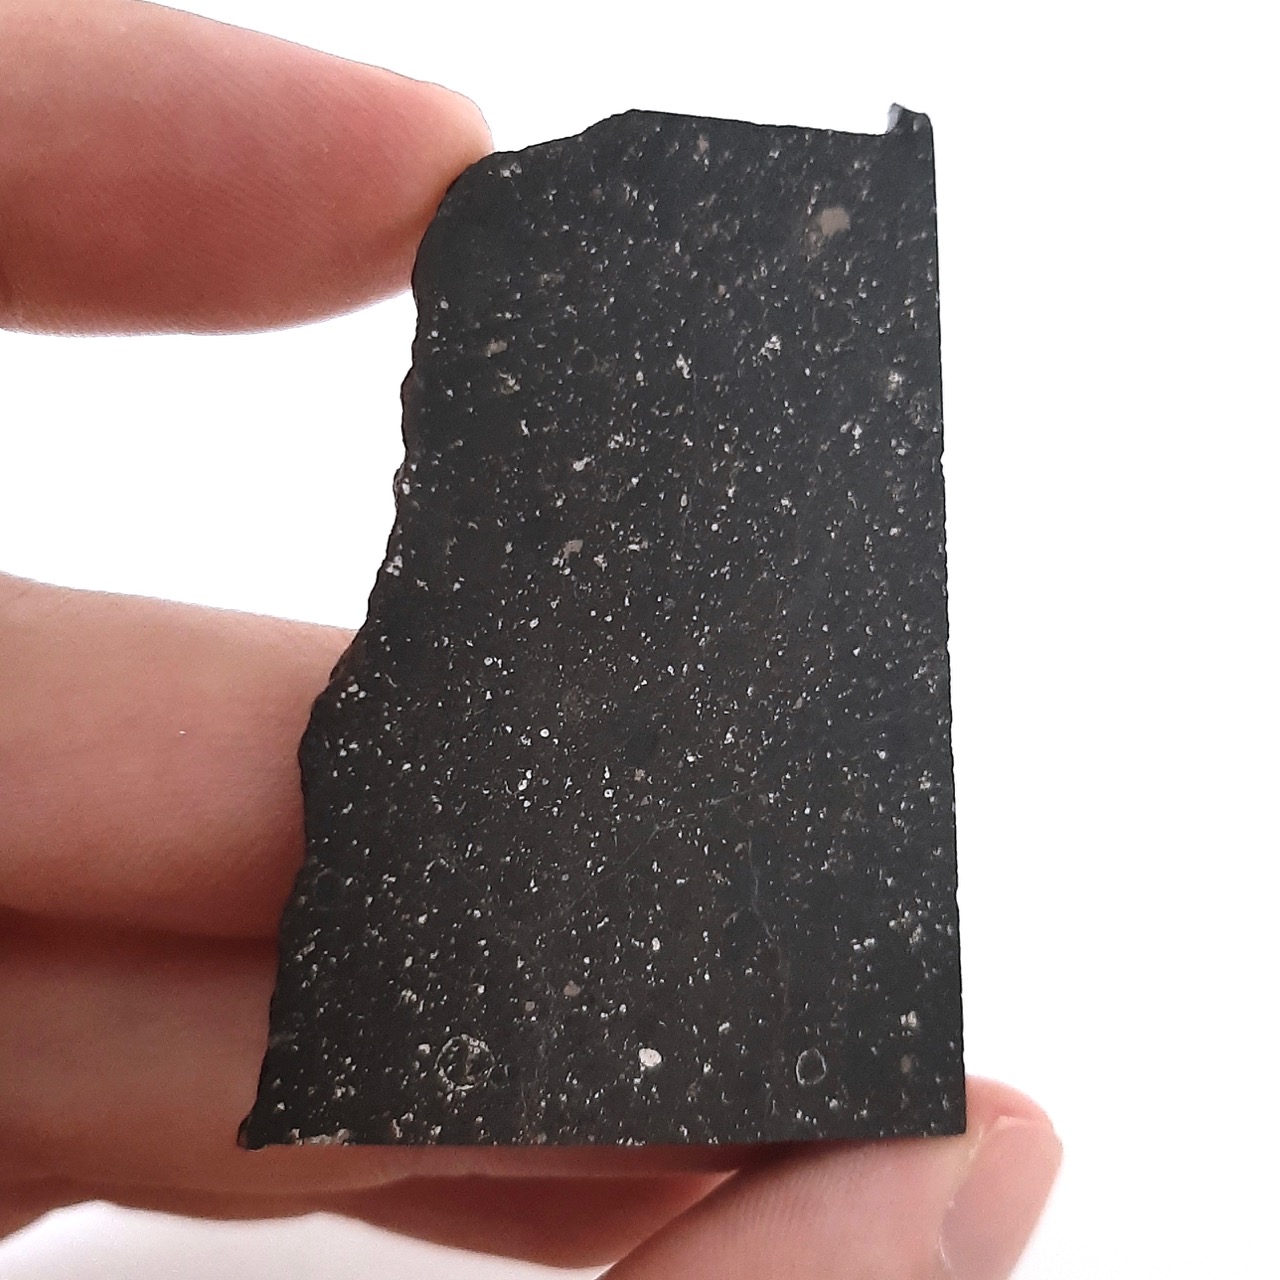 Marlow meteorite. L5 chondrite from Oklahoma.